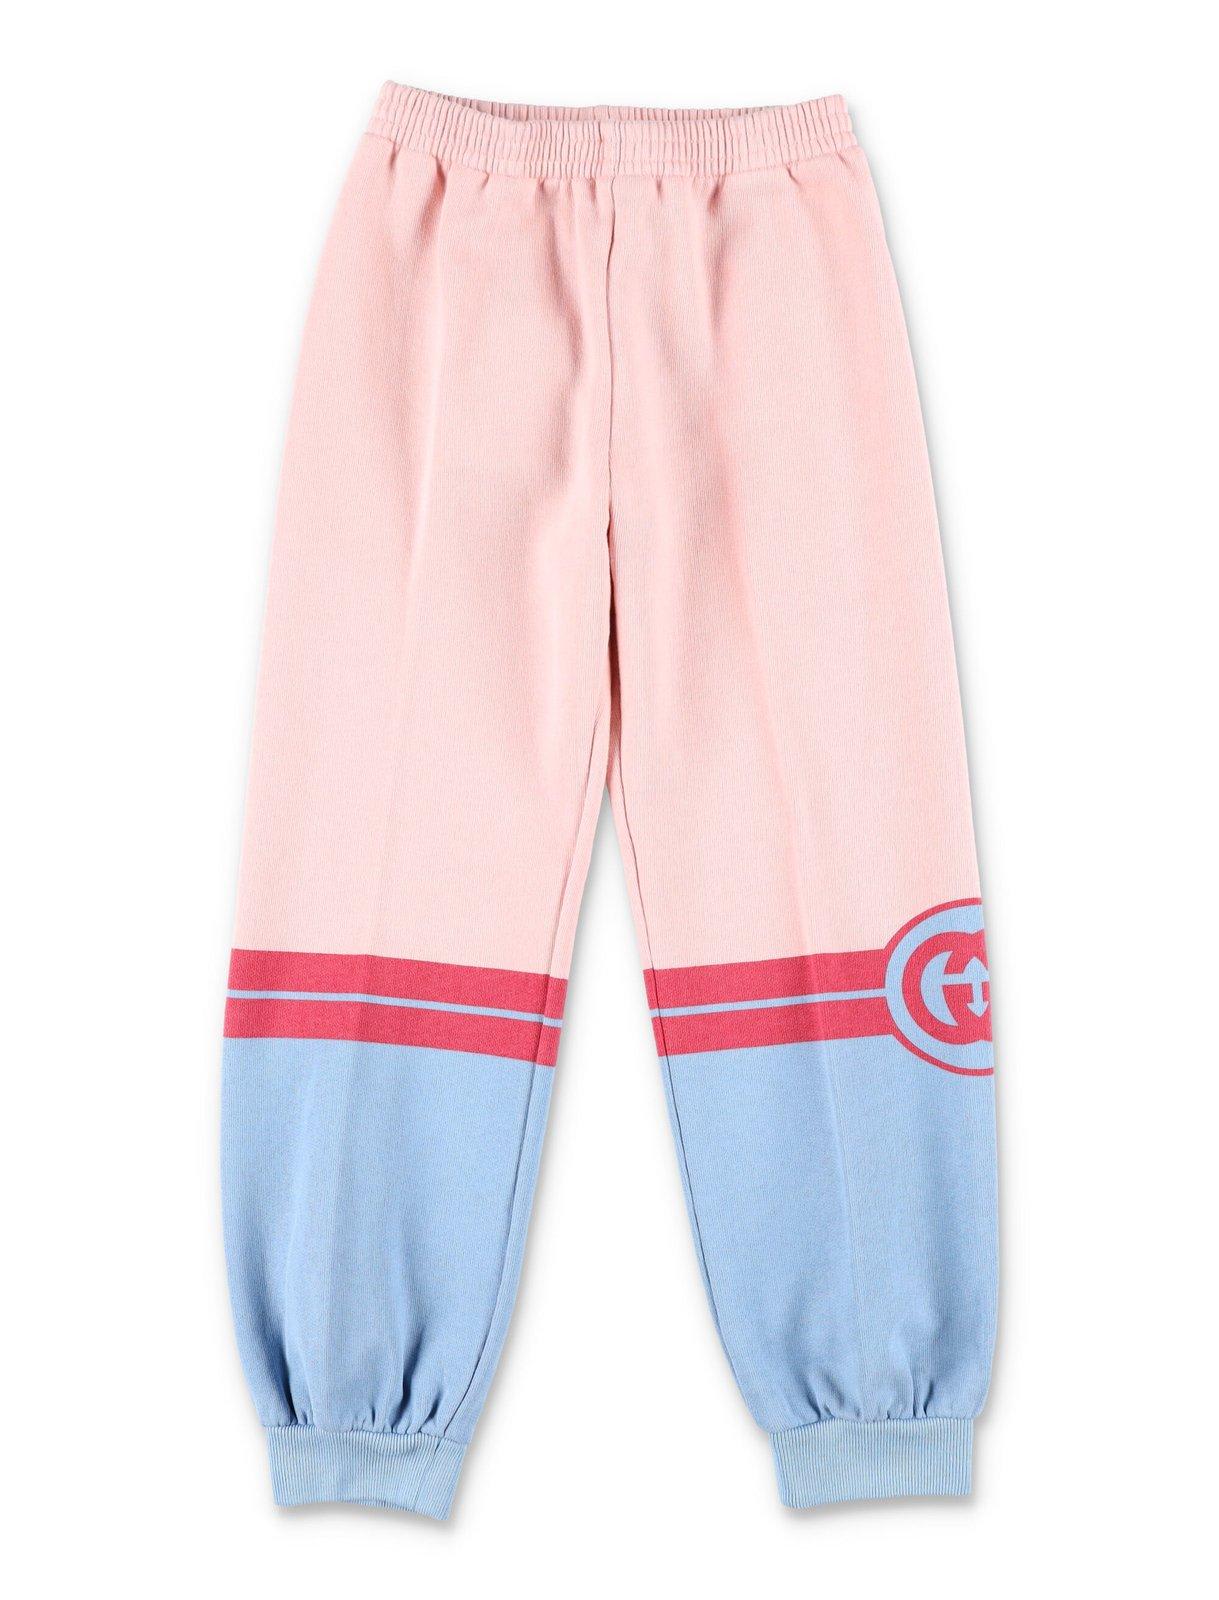 Gucci Interlocking G Printed Jersey Track Pants